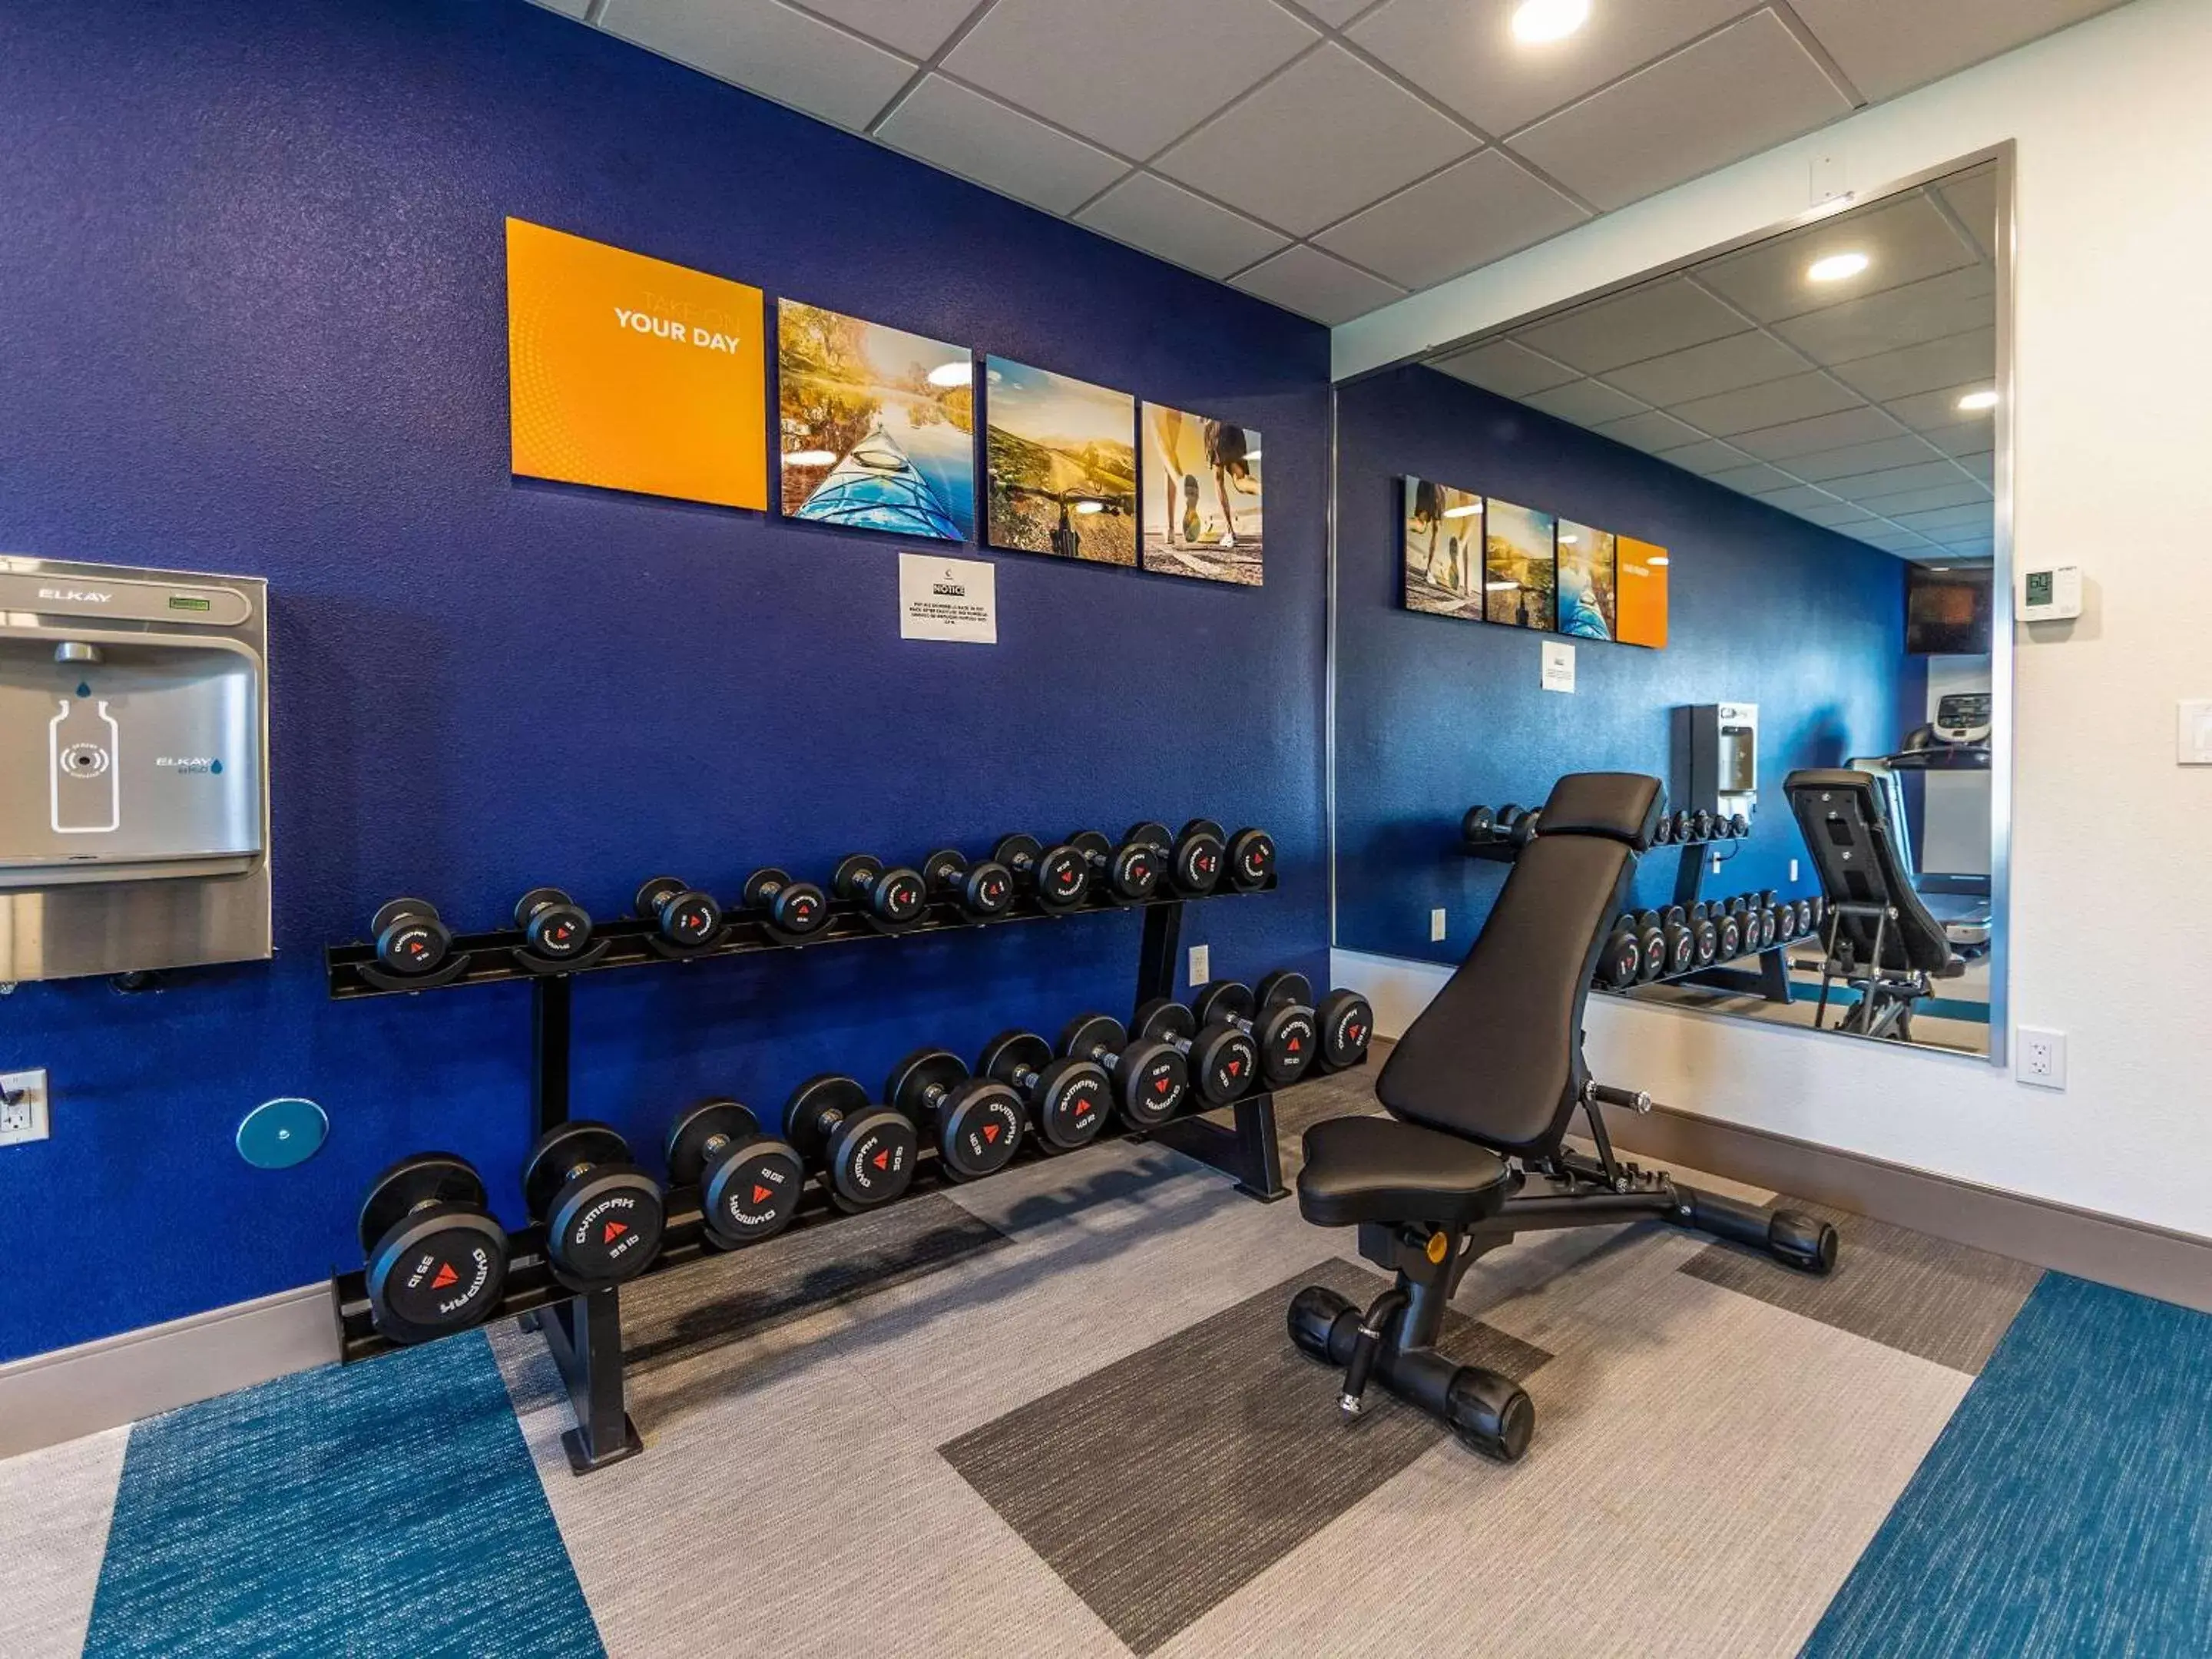 Fitness centre/facilities, Fitness Center/Facilities in Comfort Inn Hanford Lemoore